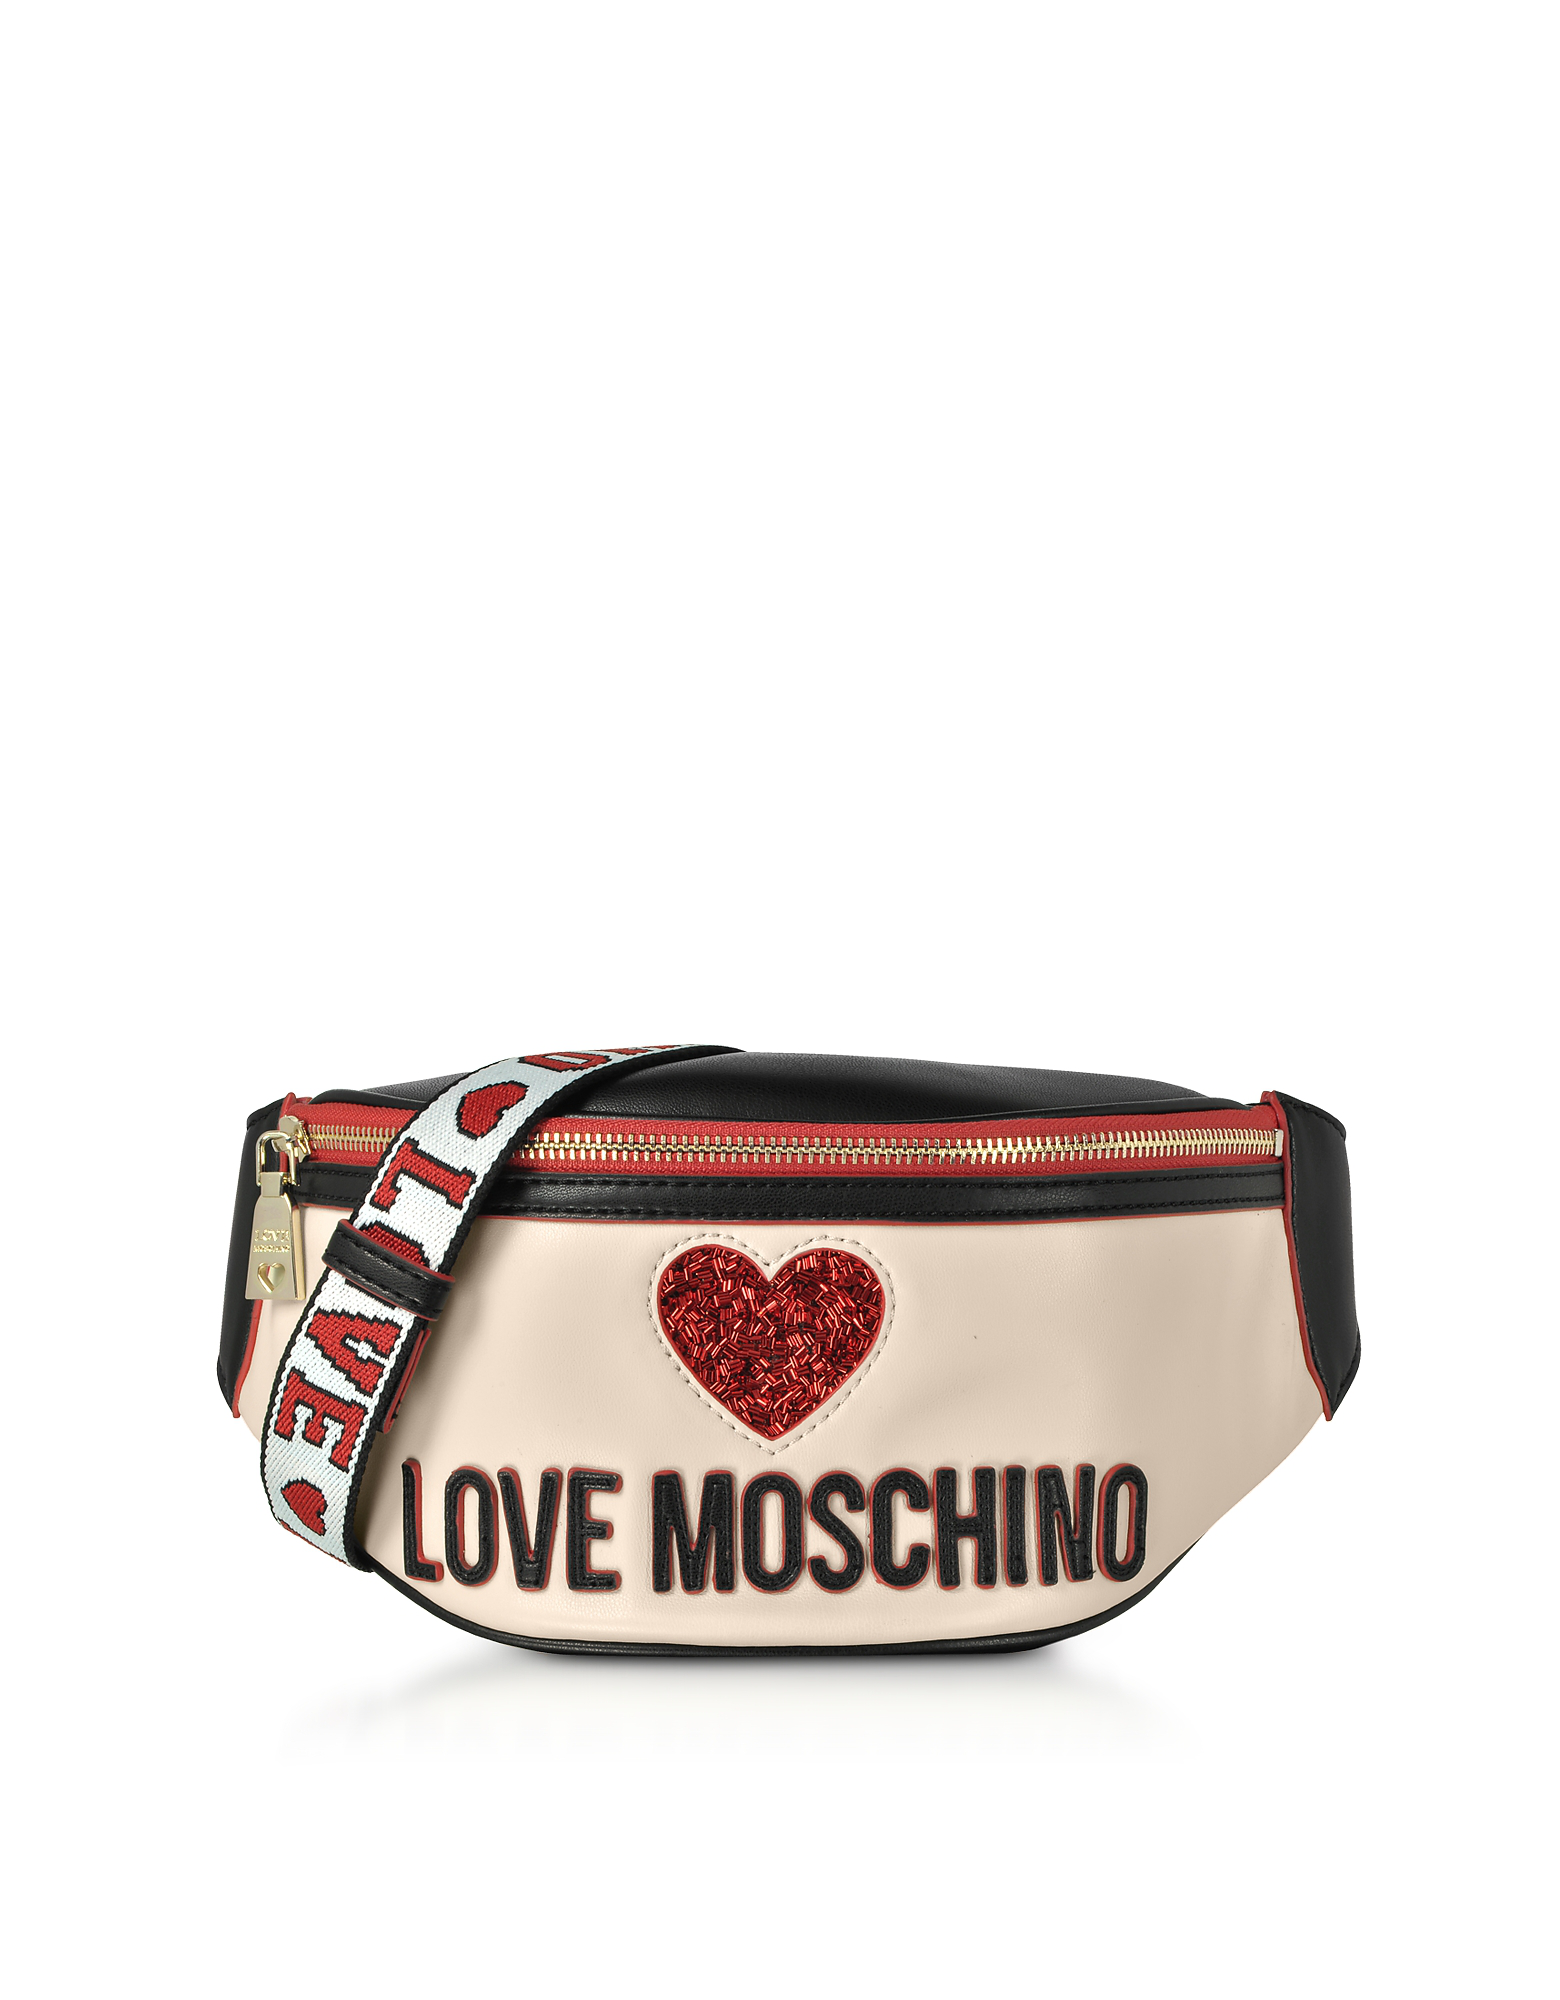 love moschino belt sale